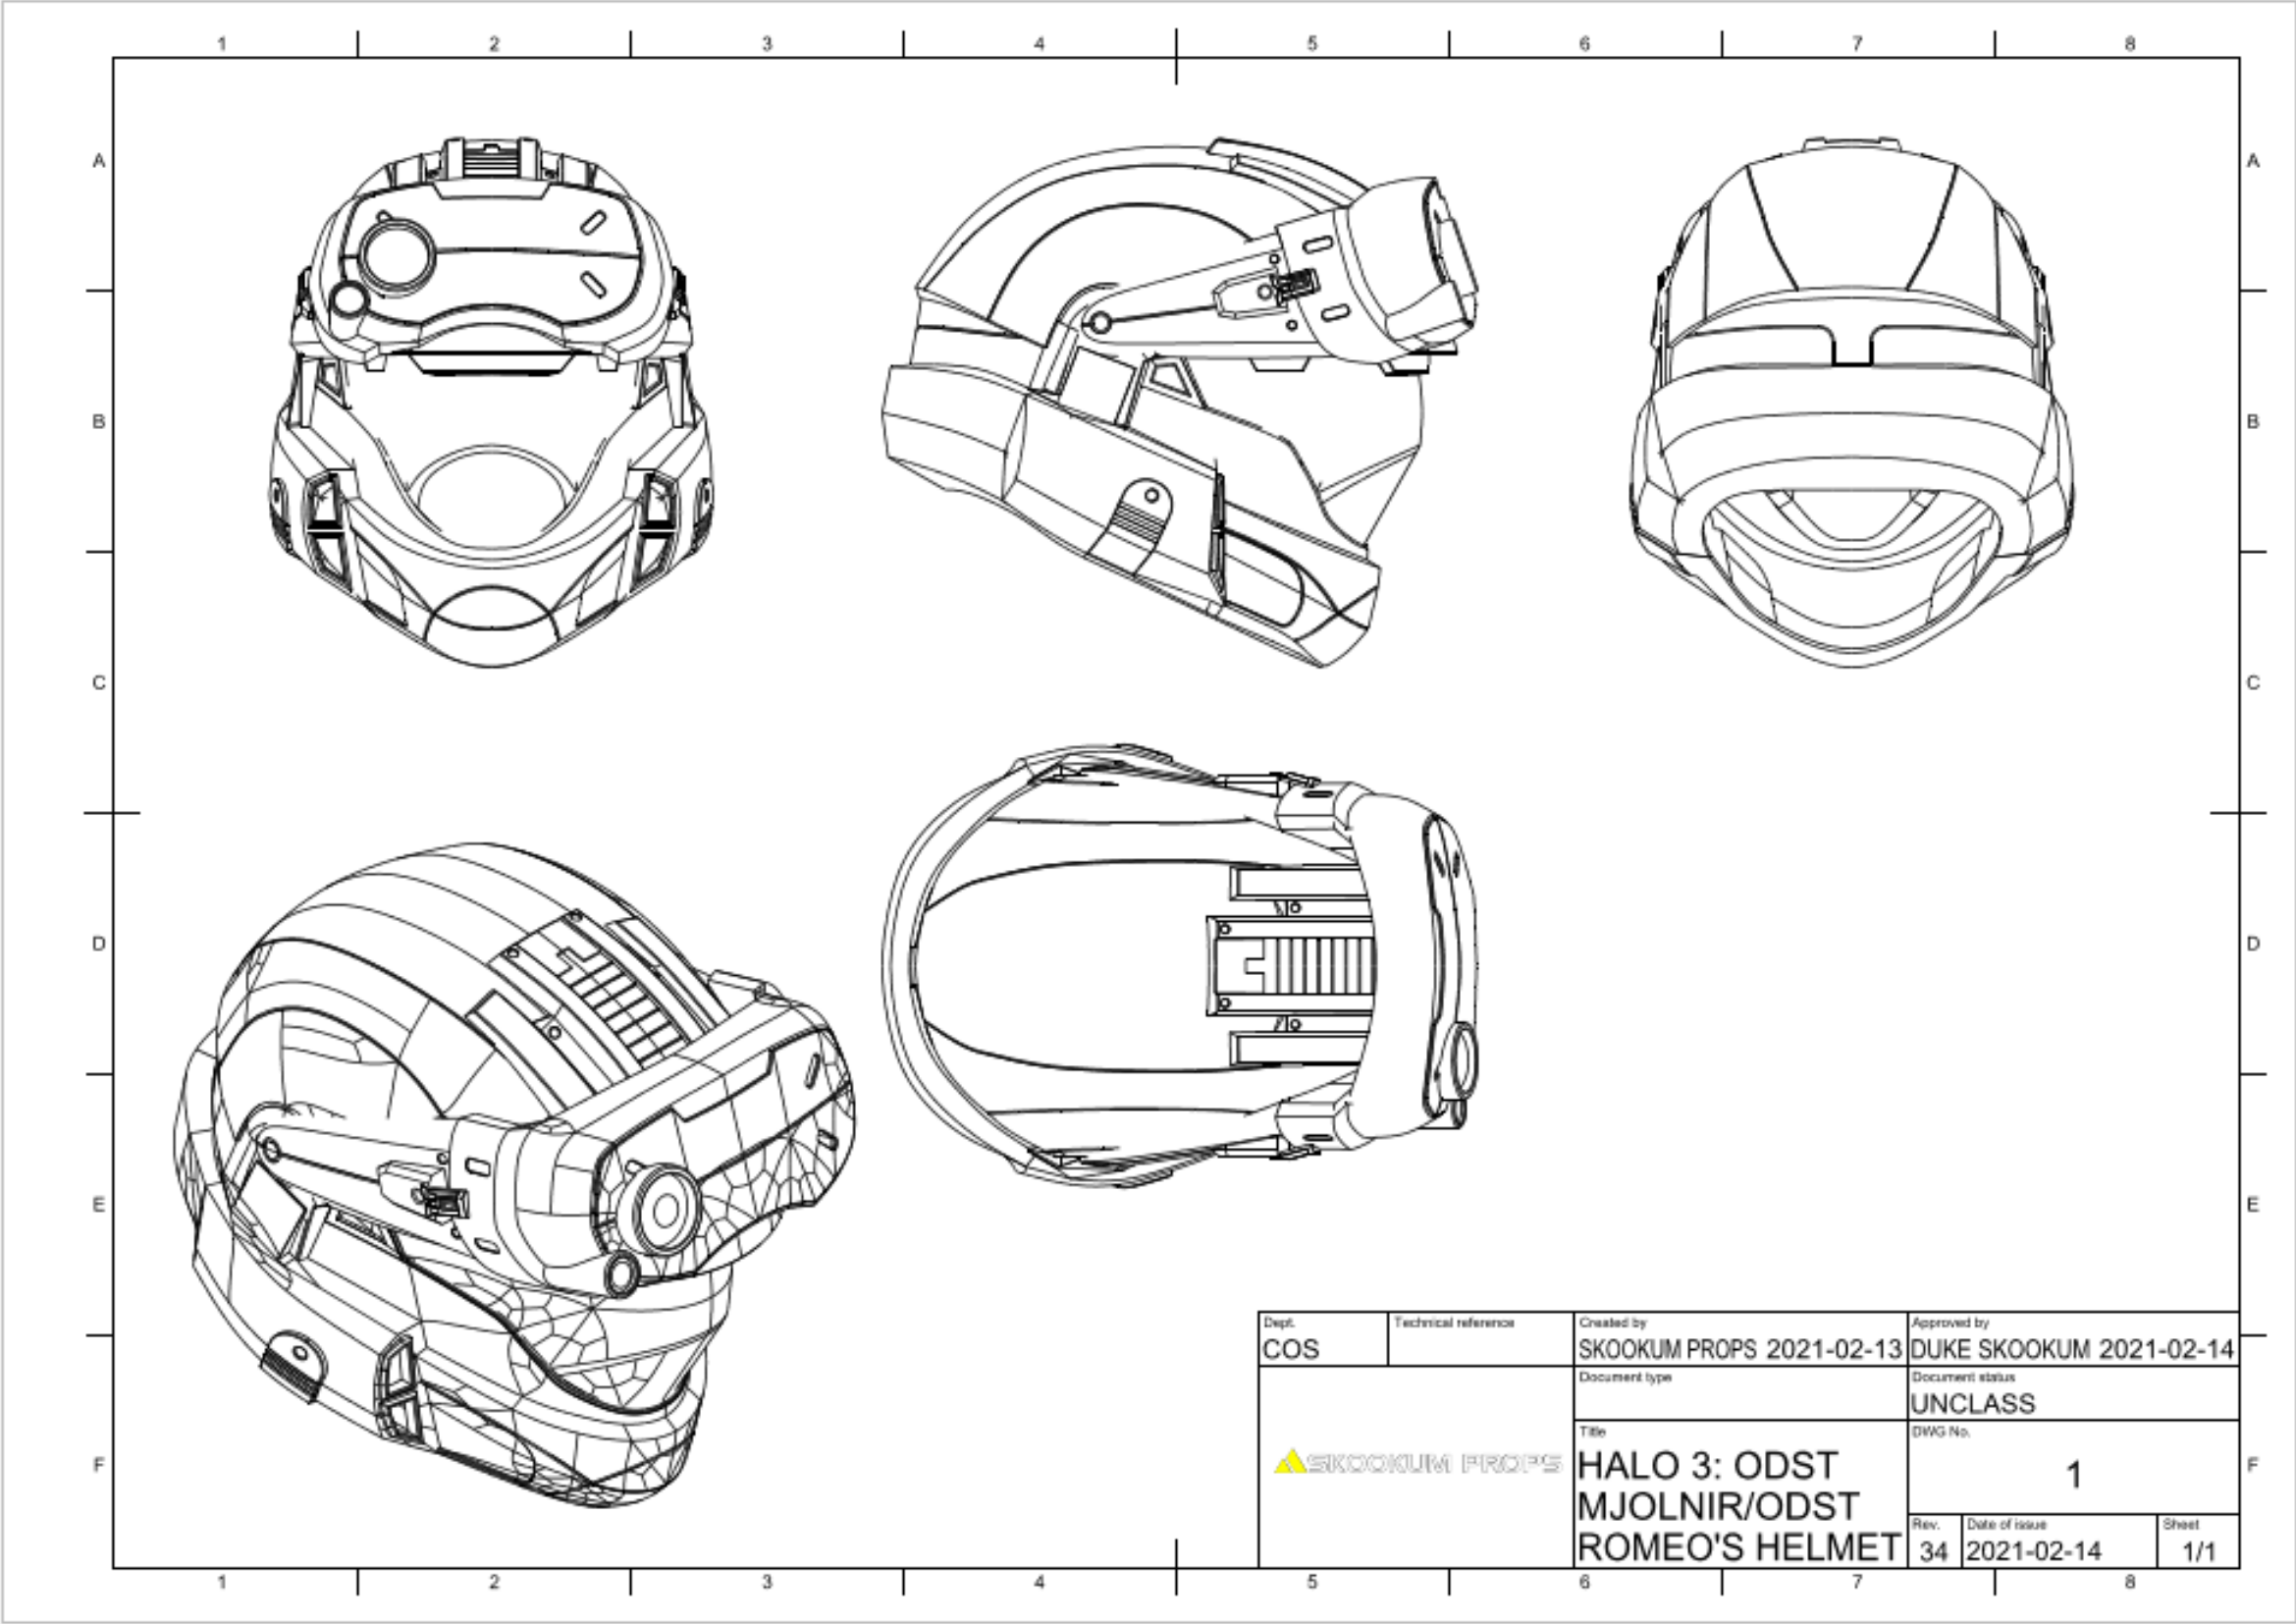 Romeo Helmet Drawing.png